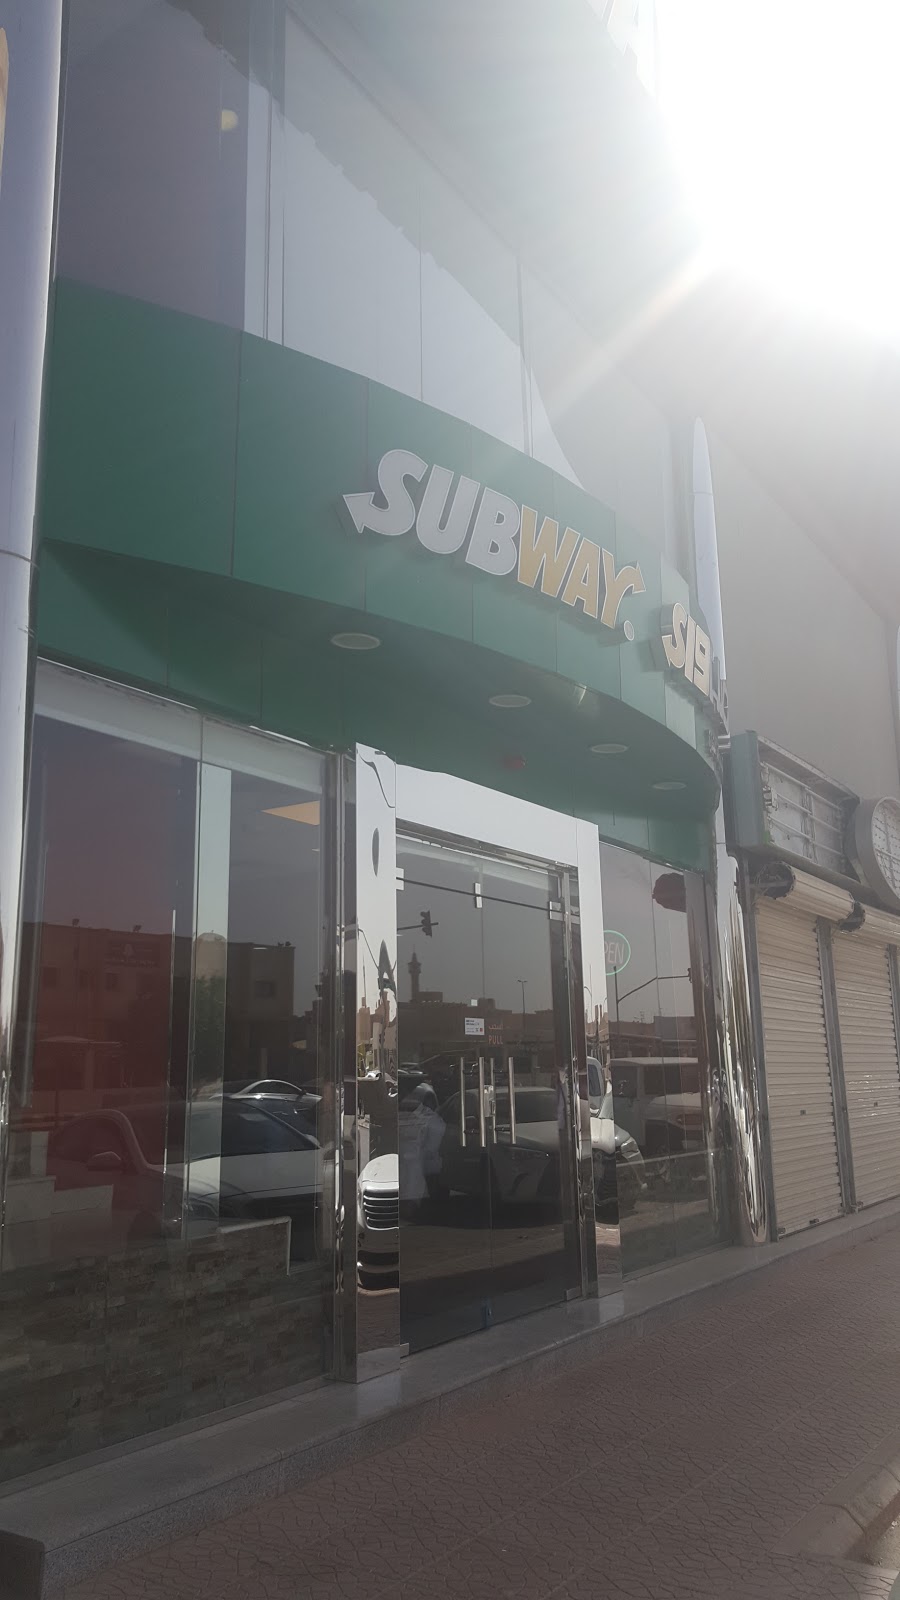 Subway Franchise World Headquarters | 325 Sub Way, Milford, CT 06461 | Phone: (203) 877-4281